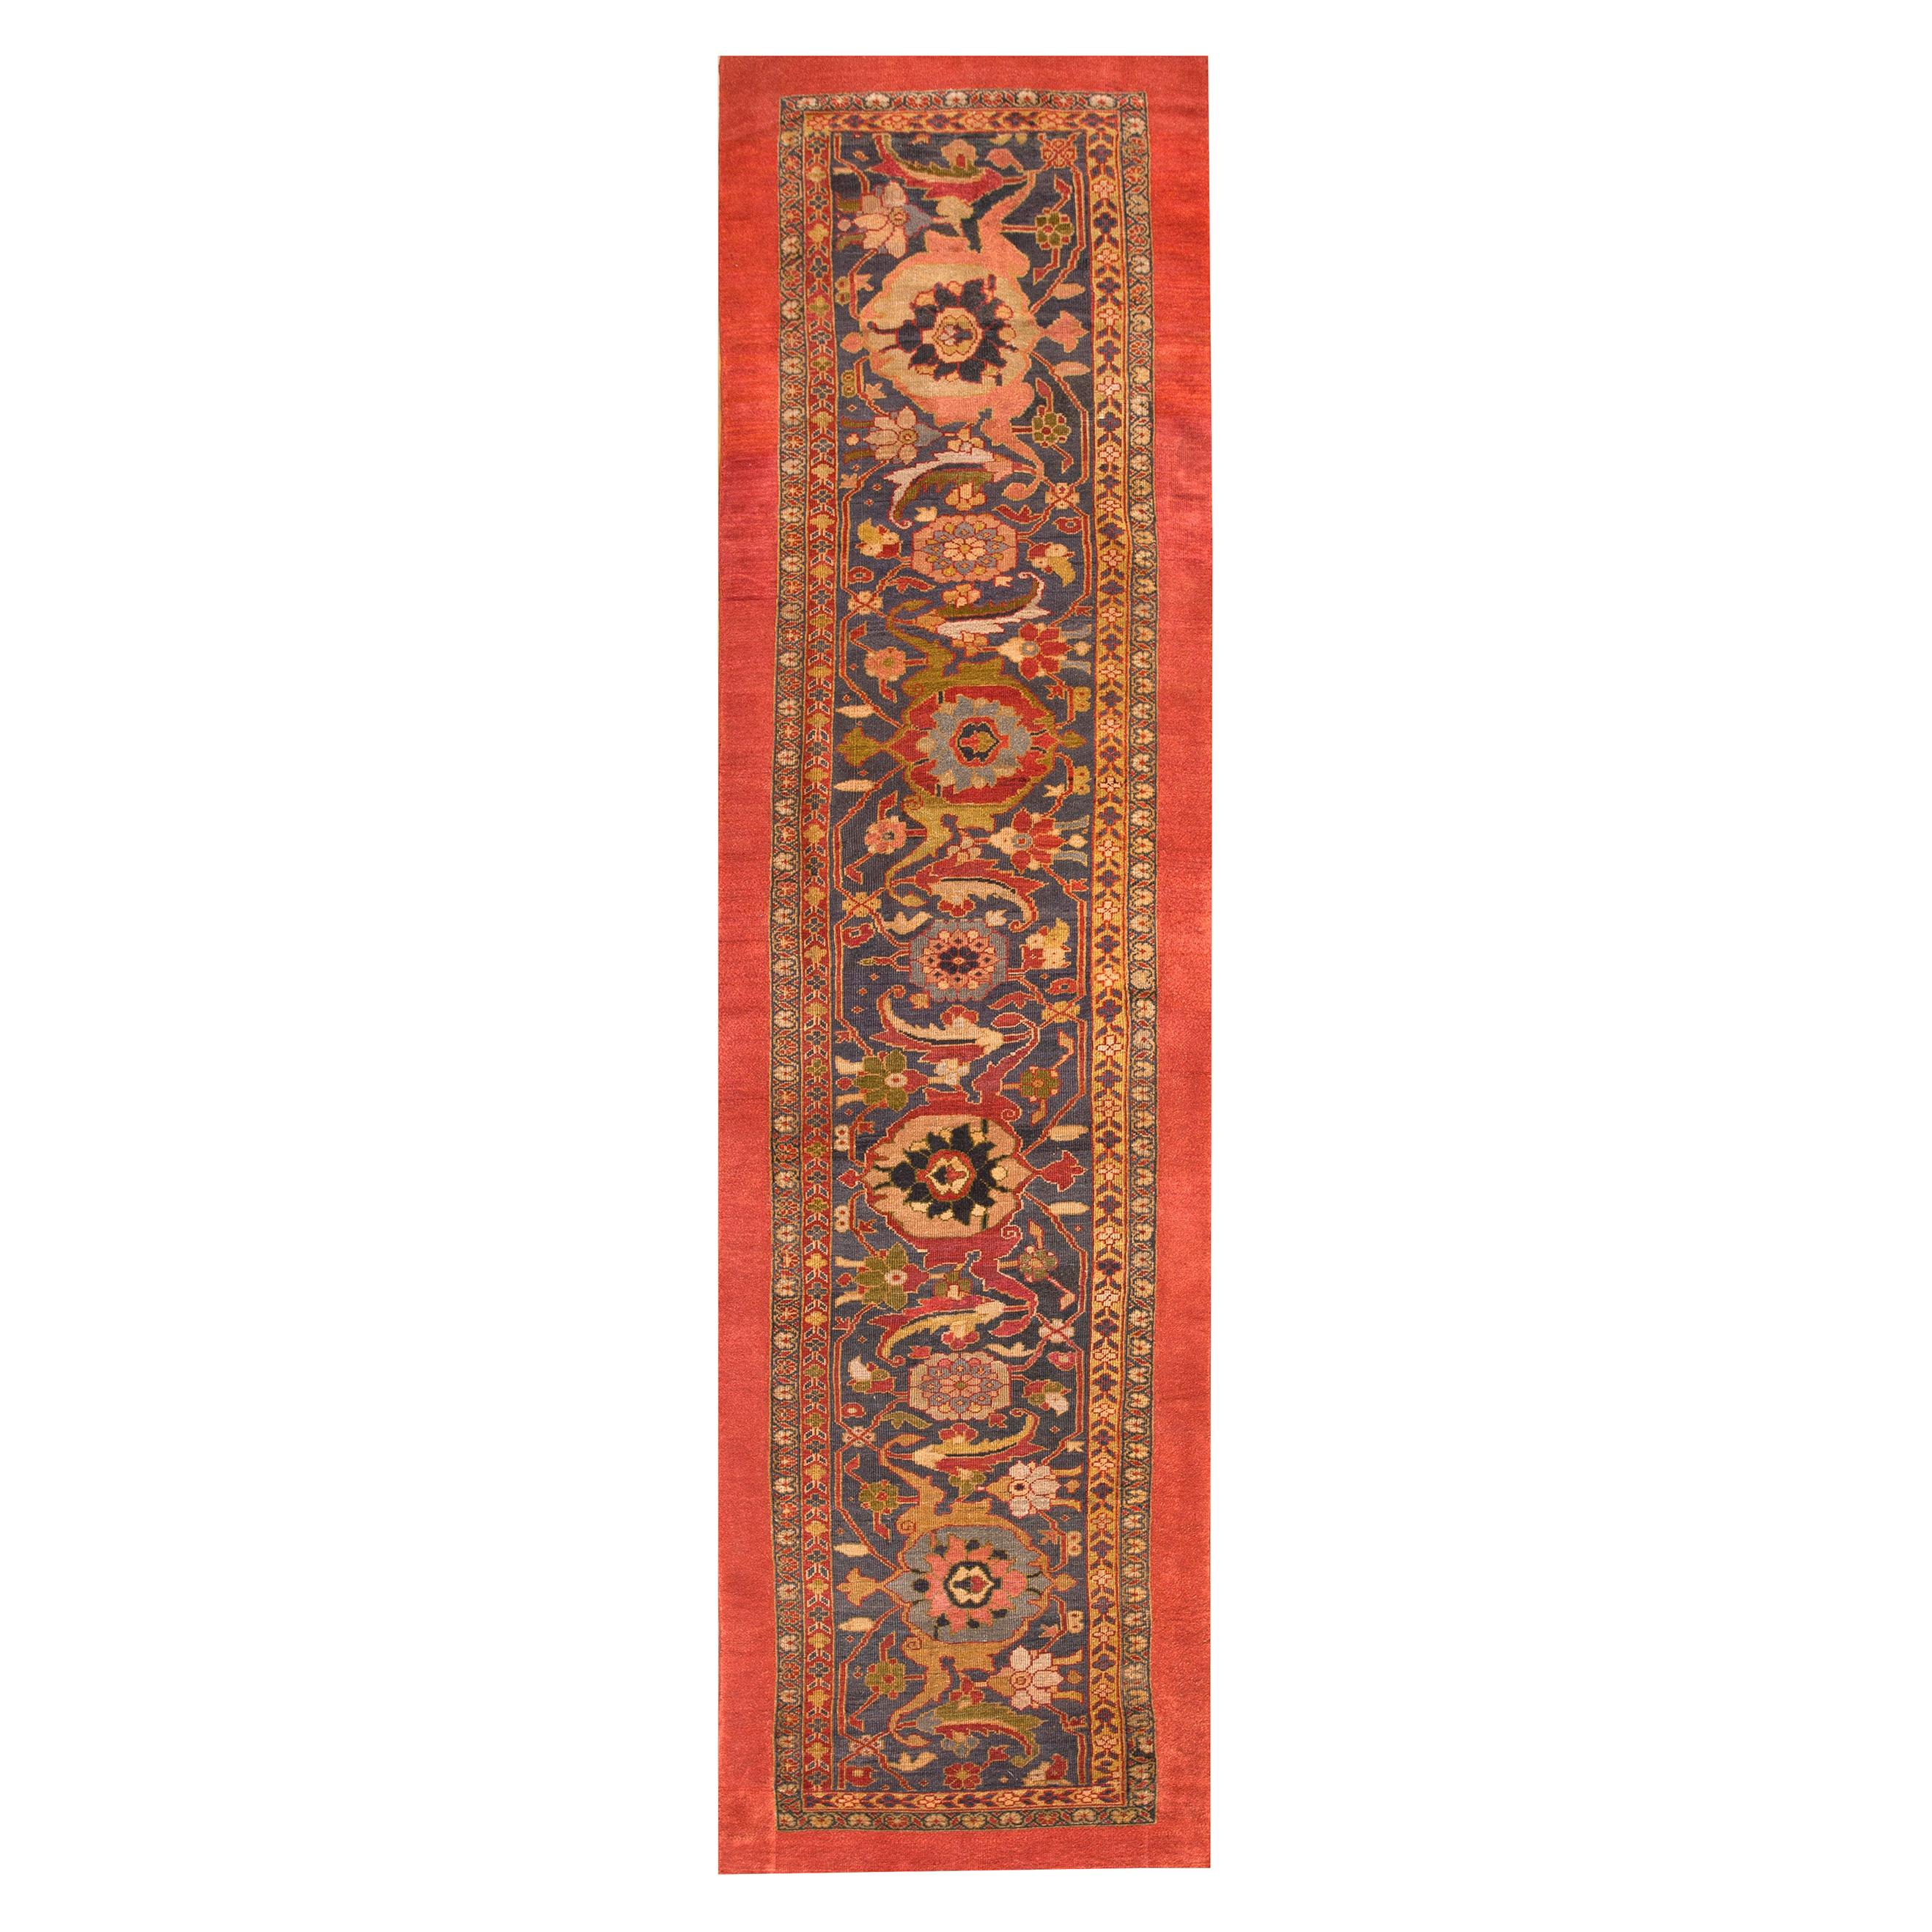 19th Century Persian Sultanabad Carpet ( 3'6" x 13' - 107 x 396 )